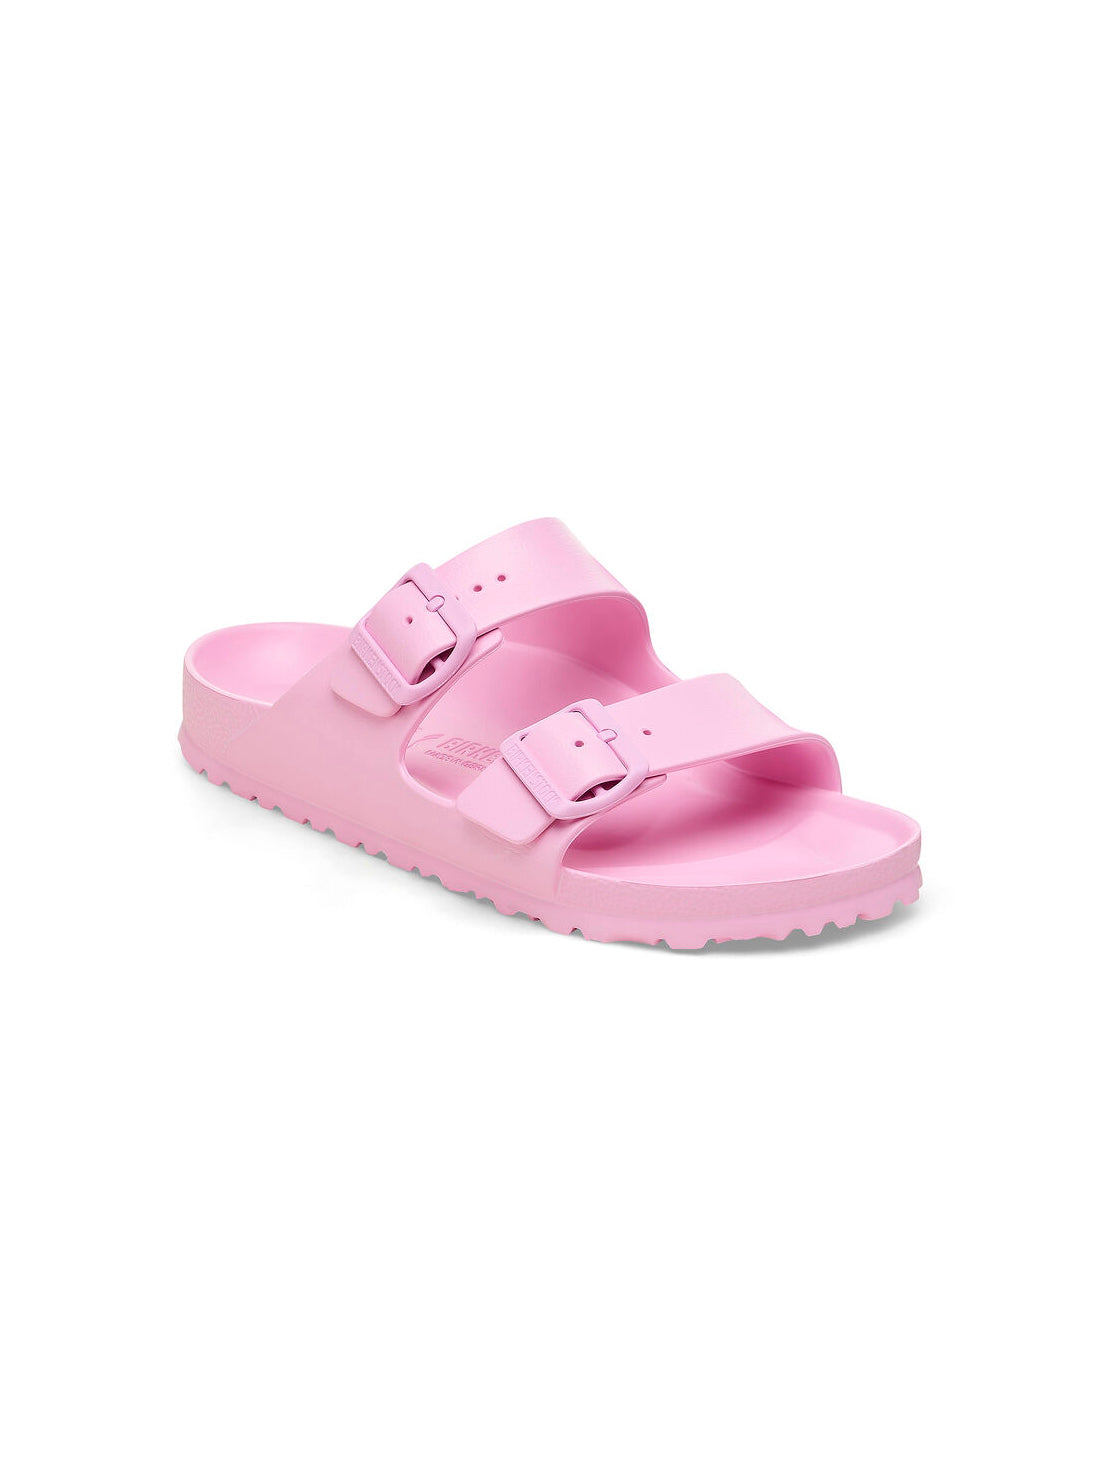 birkenstock arizona essentials eva sandal in fondant pink